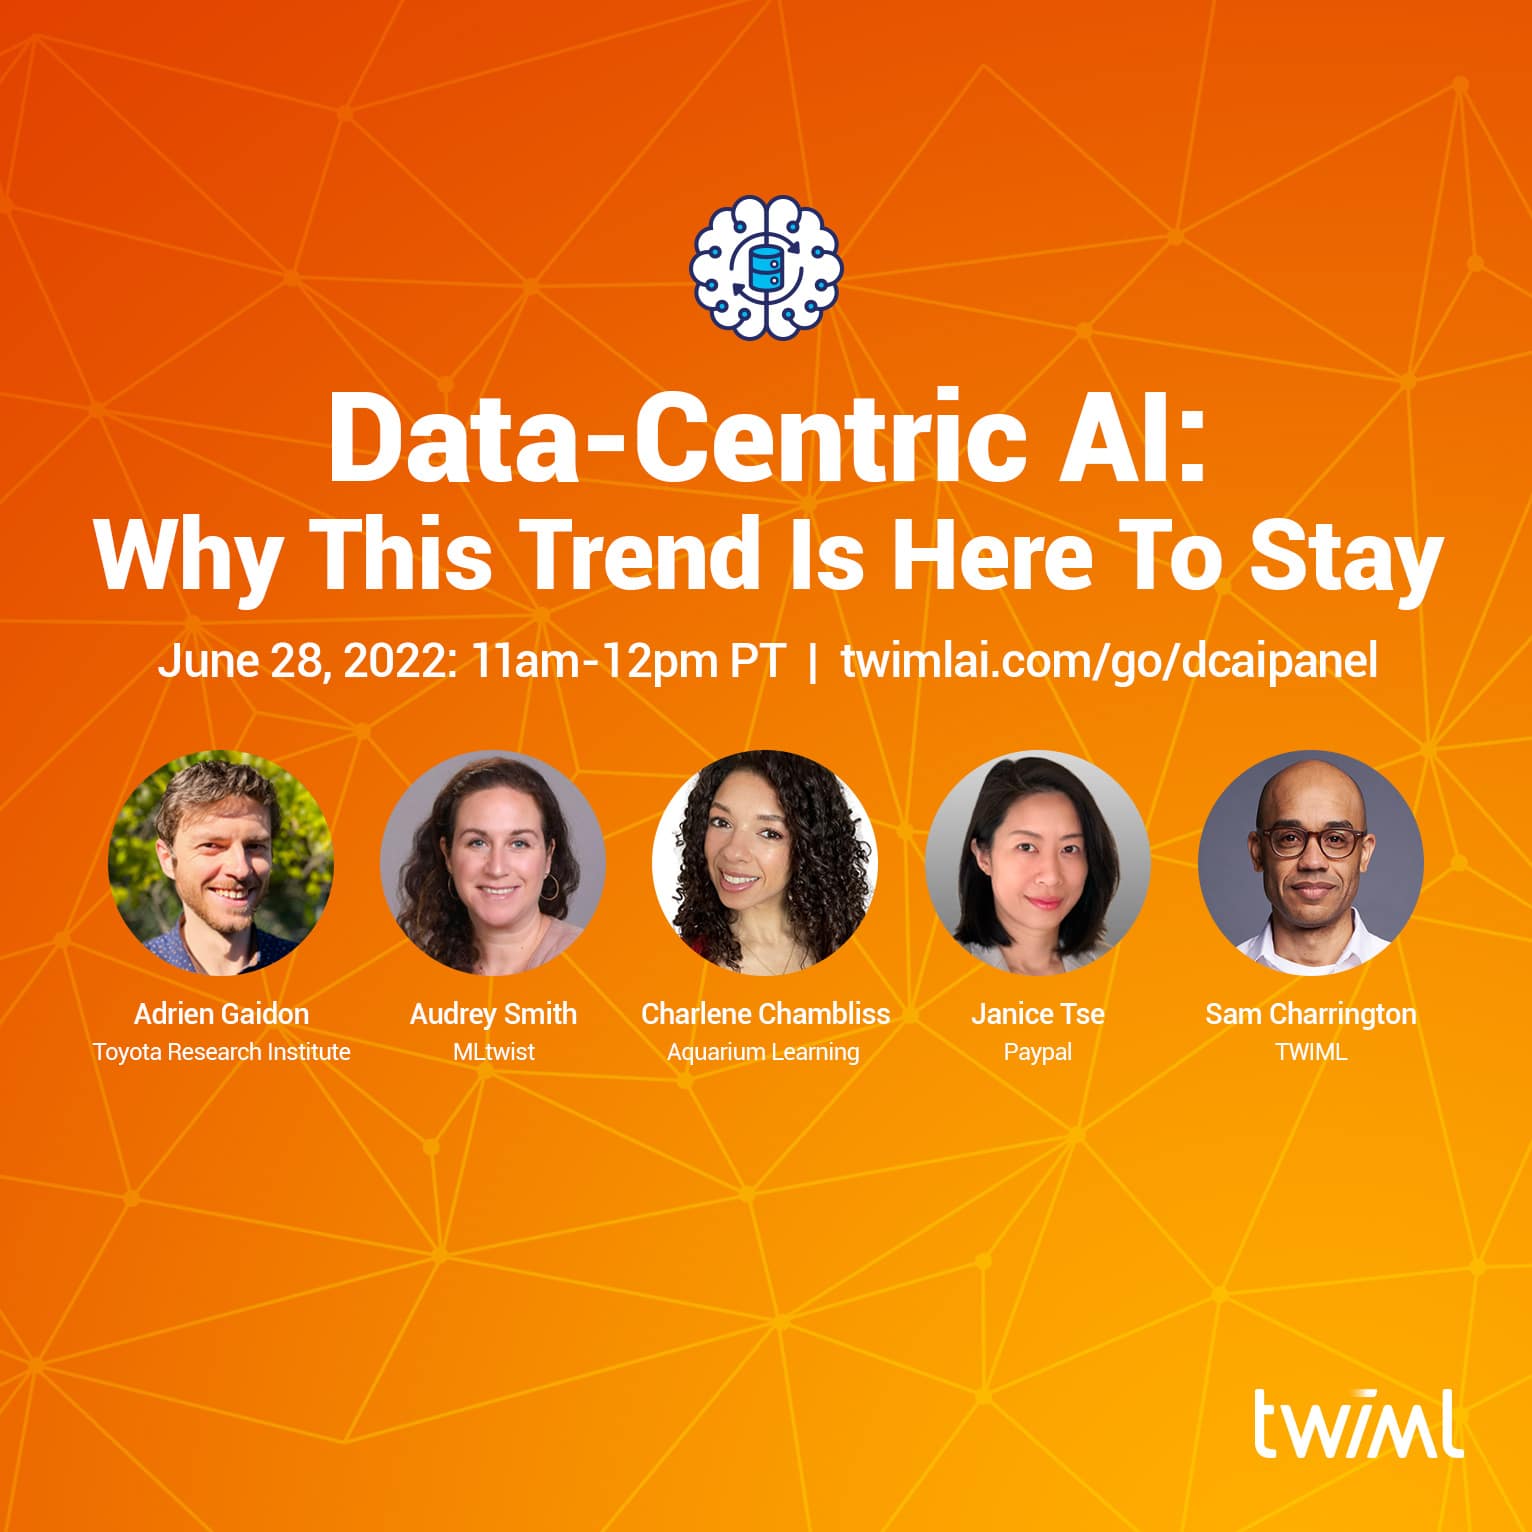 TWIML Data-Centric AI Panel